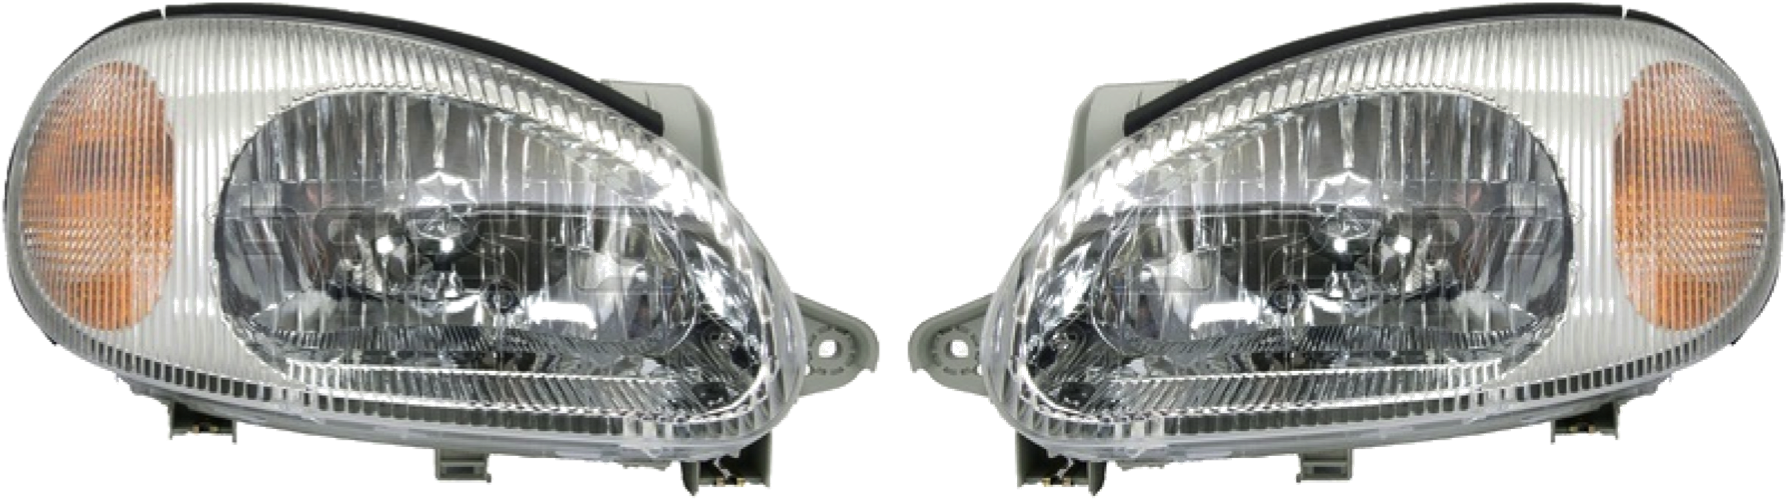 Car Headlight Pair Transparent Background PNG